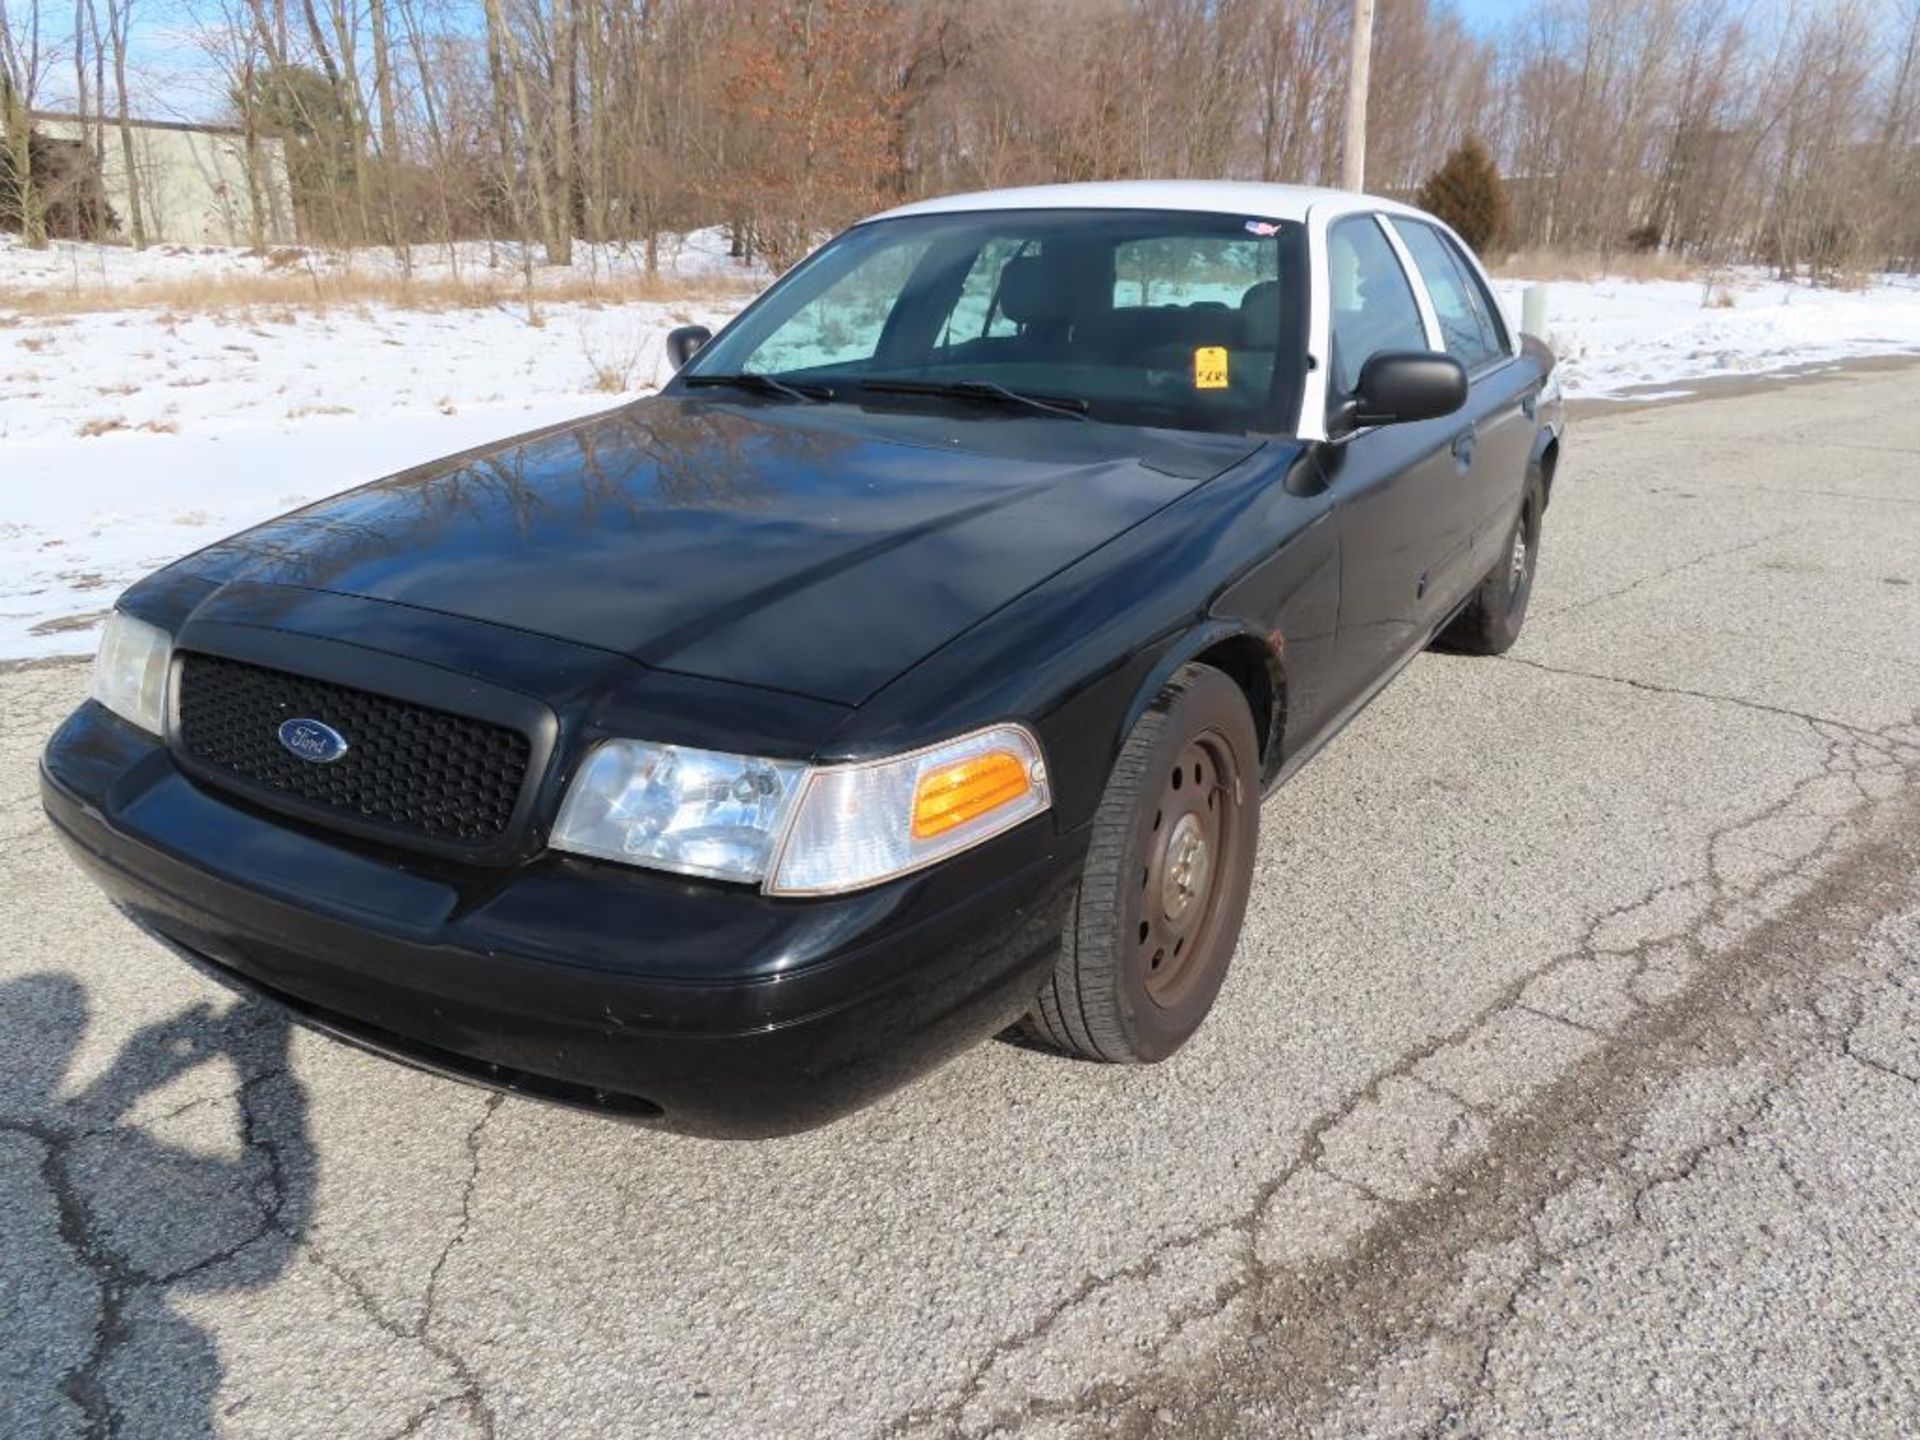 2008 Ford Crown Victoria Police Car. 107,884 miles. VIN 2FAFP71V98X176735.